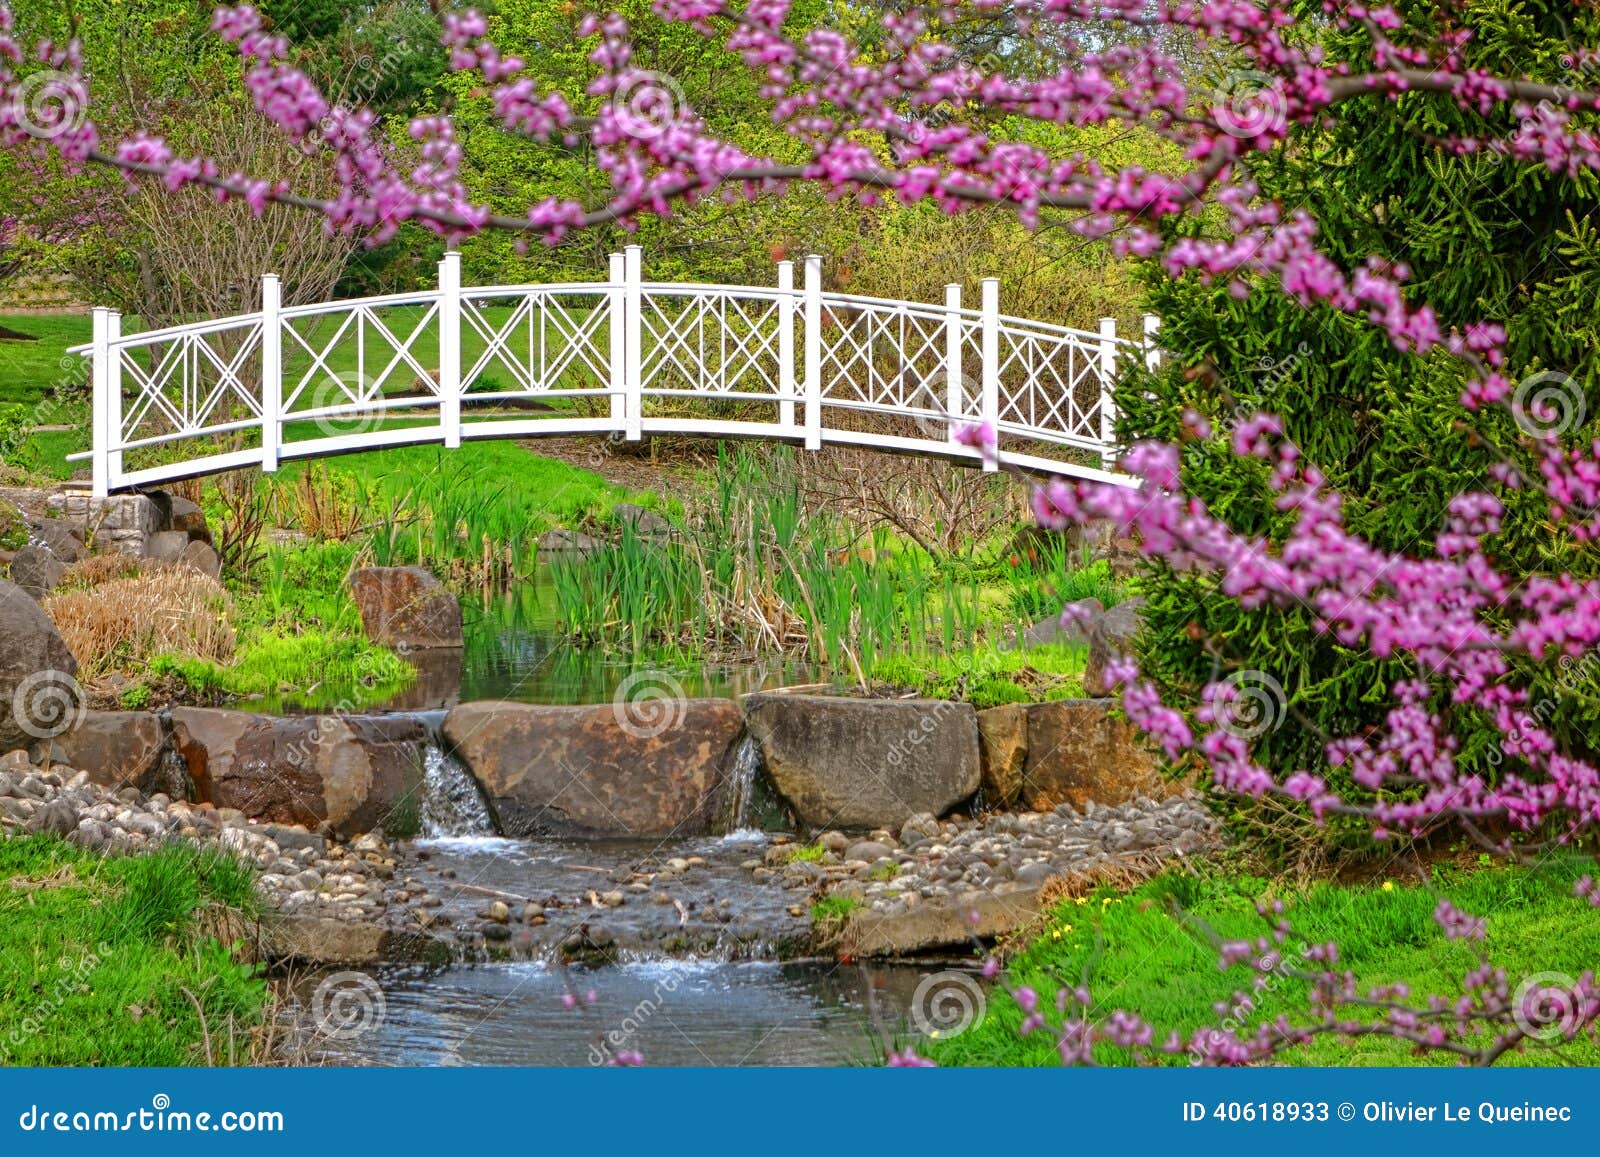 Sayen Park Botanical Gardens Ornamental Bridge Stock Image Image